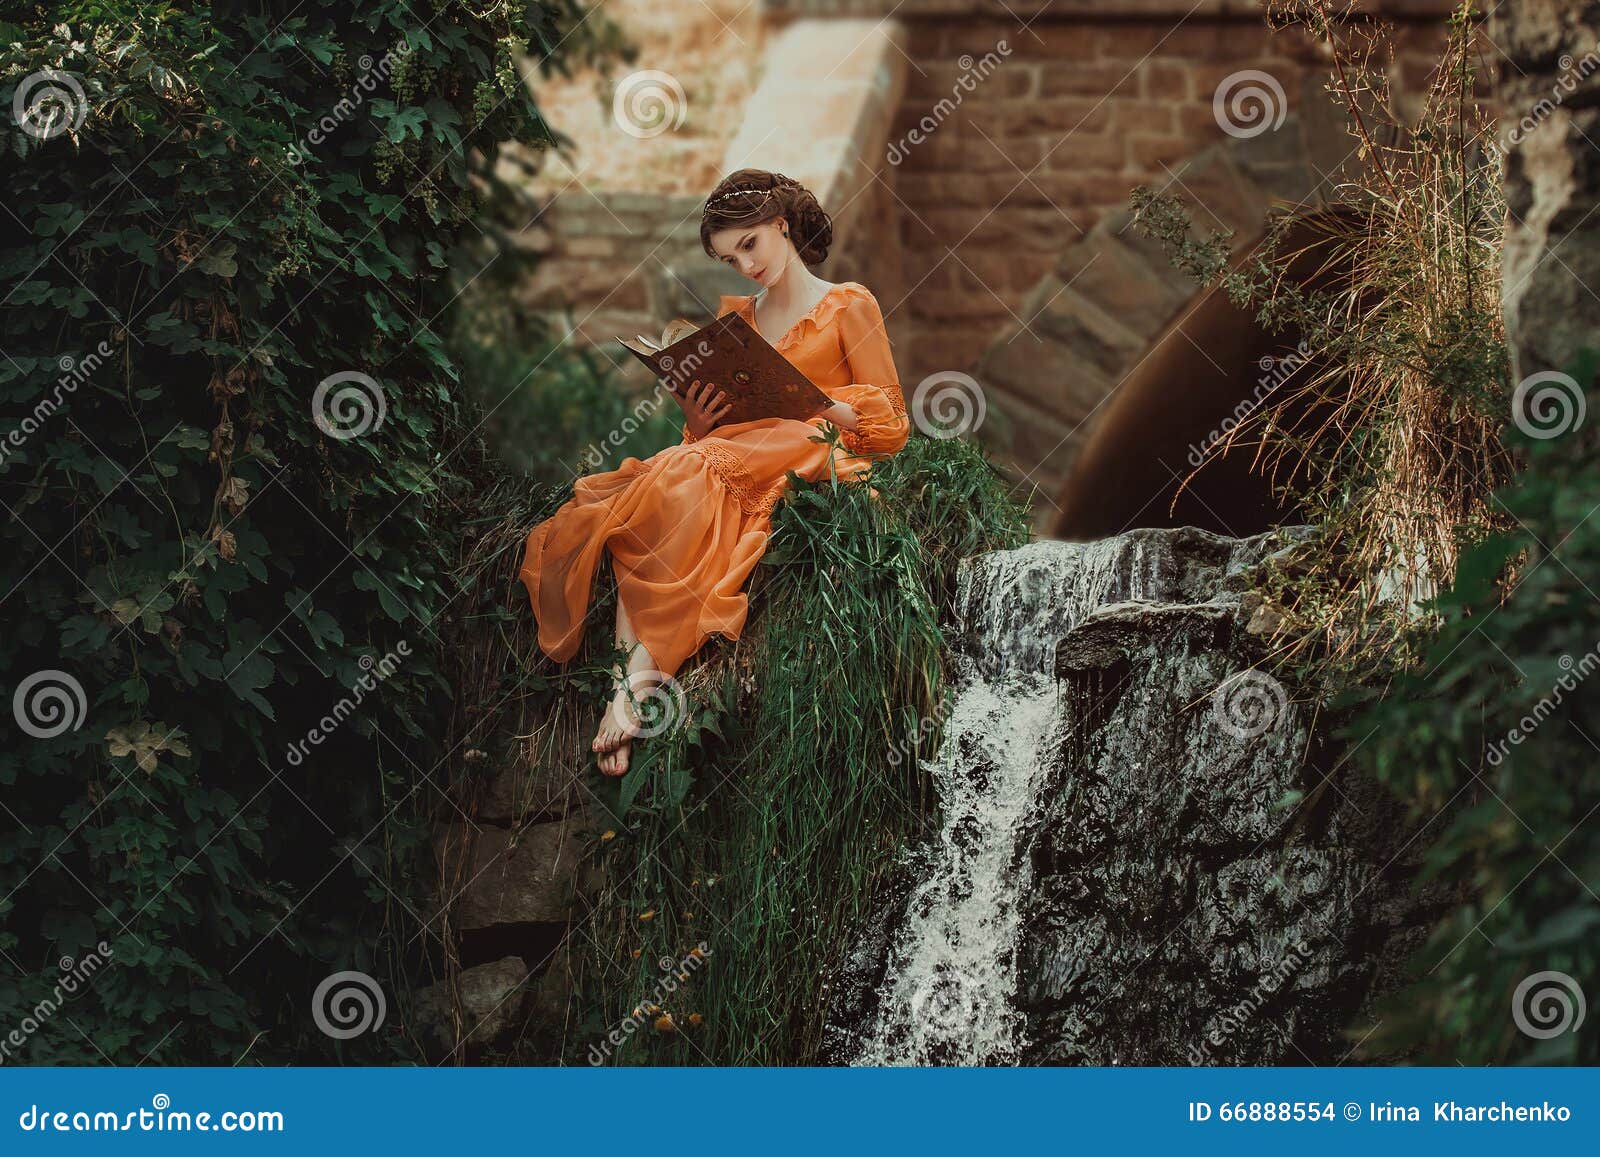 the beautiful countess in a long orange dress